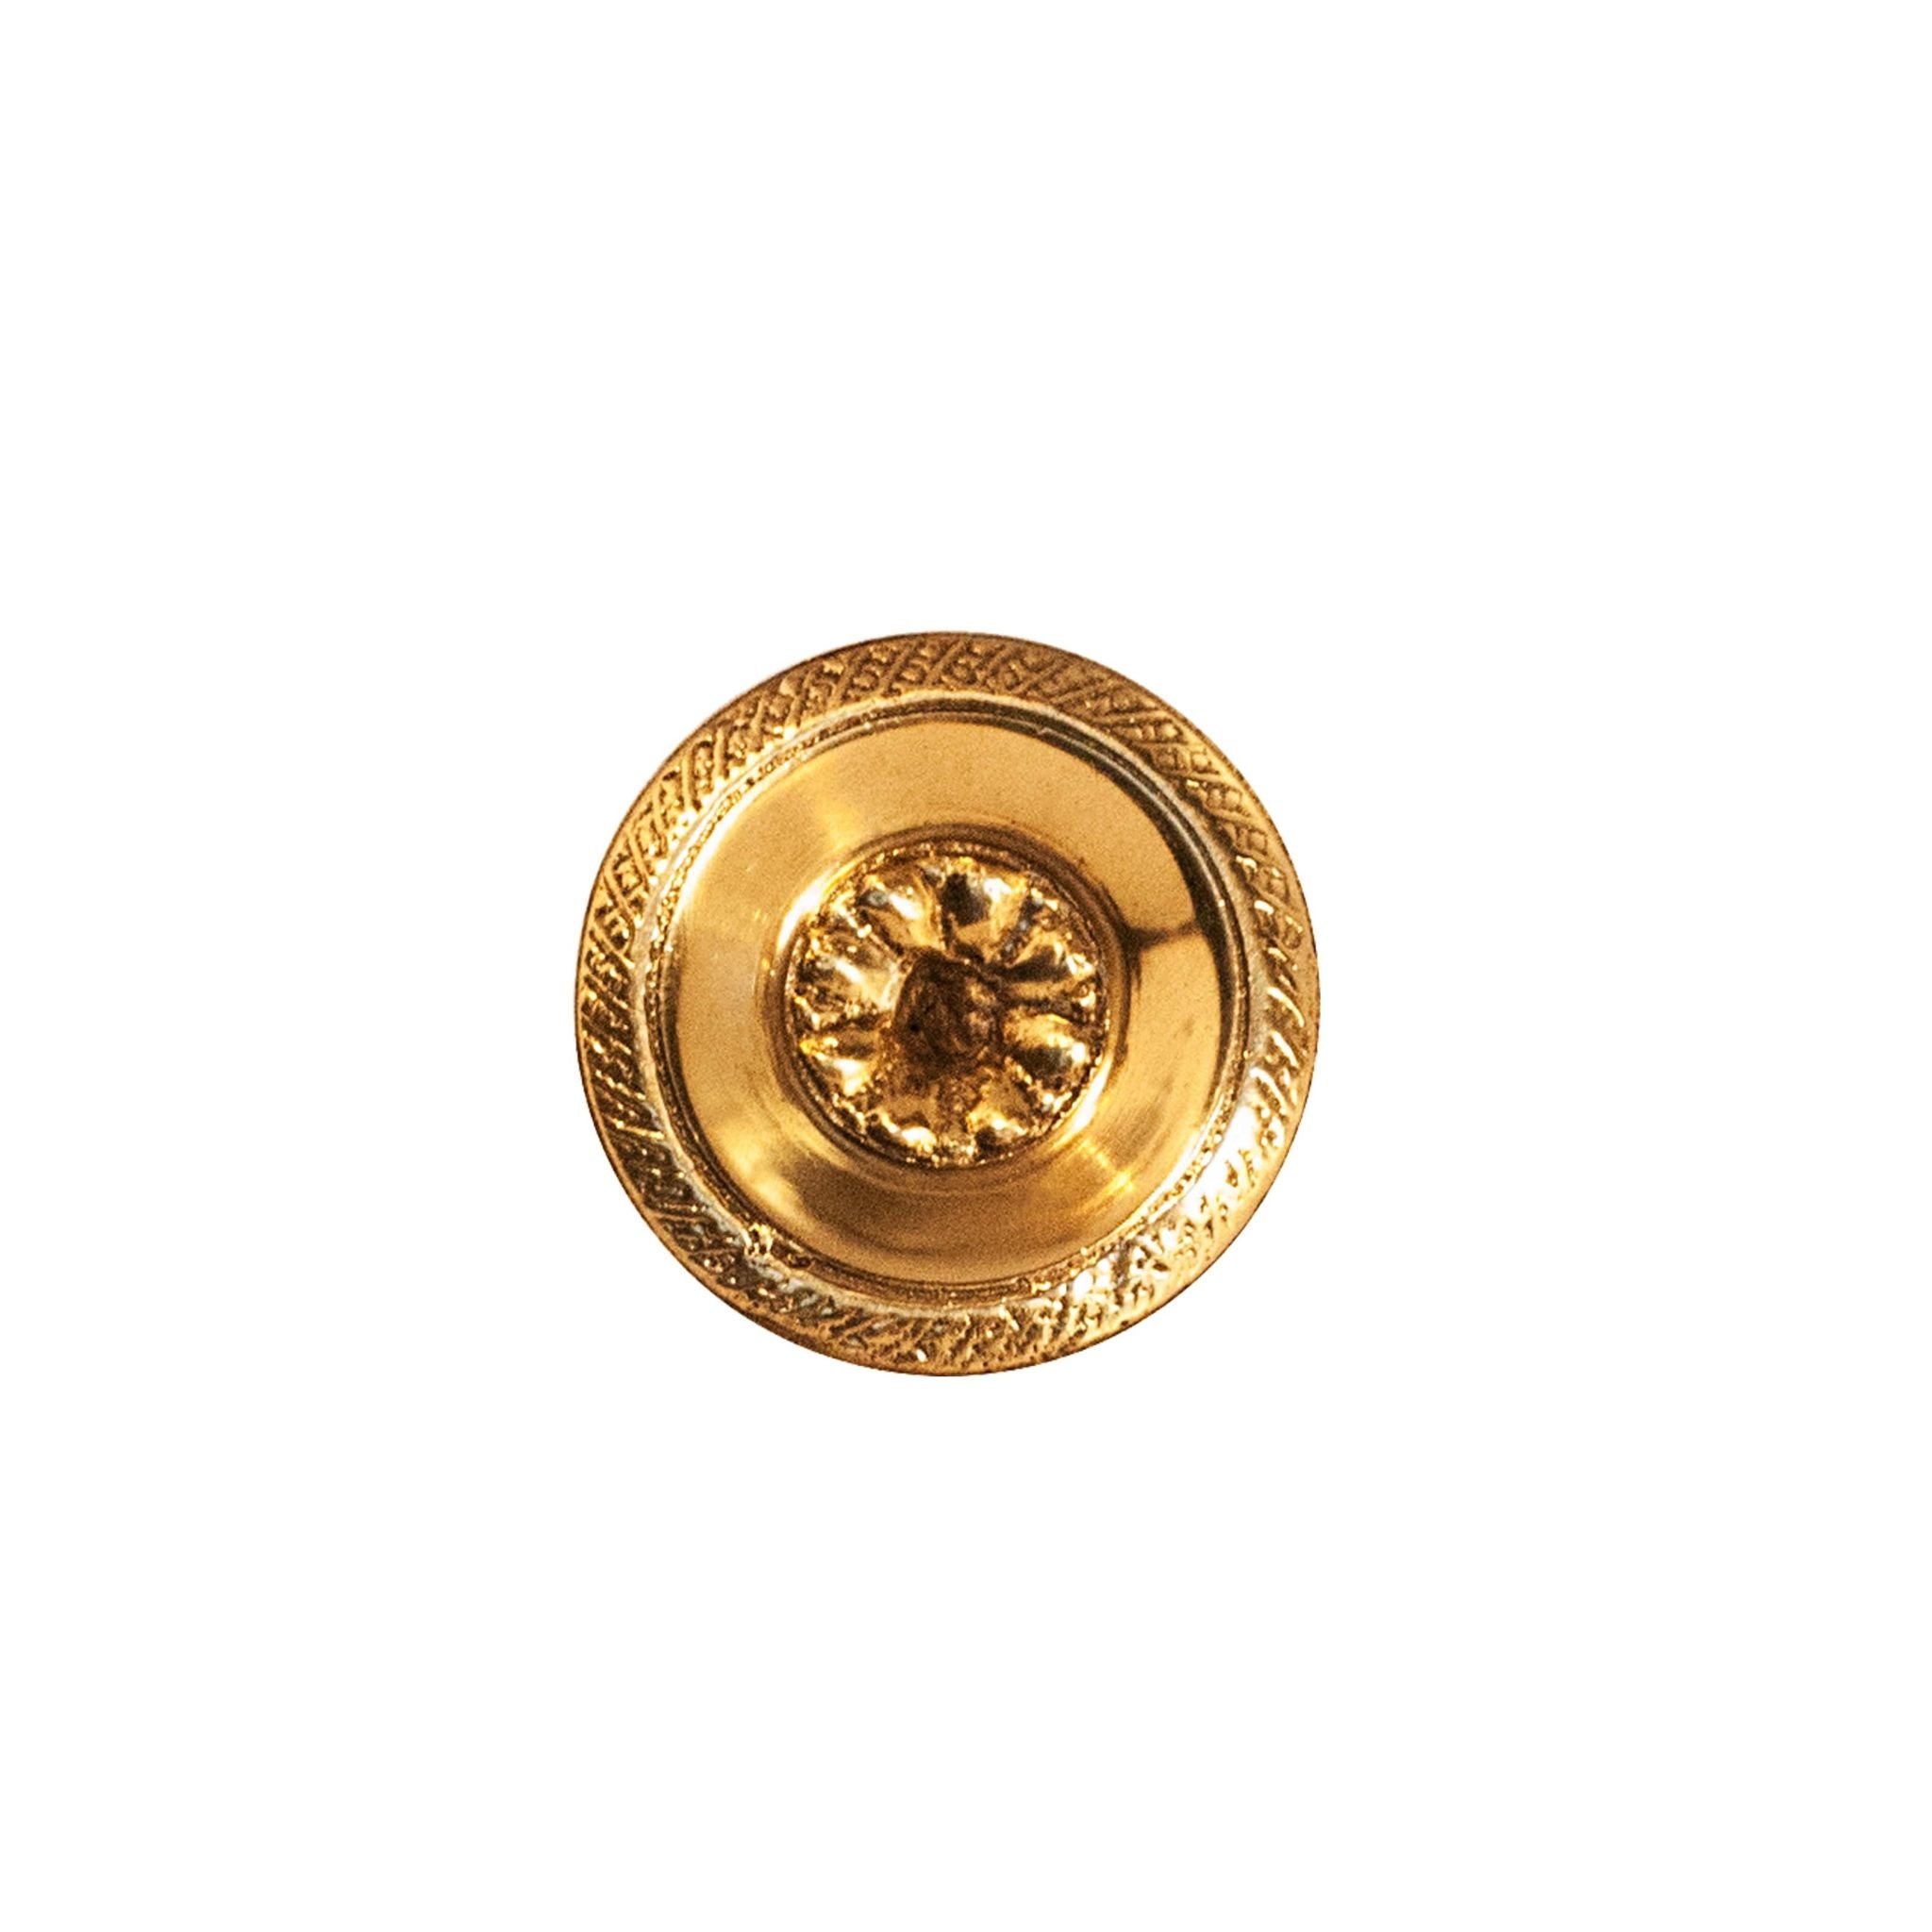 Novecento Glasgow Brass Knob: A simple circular brass knob, perfect for adding timeless elegance to your décor.